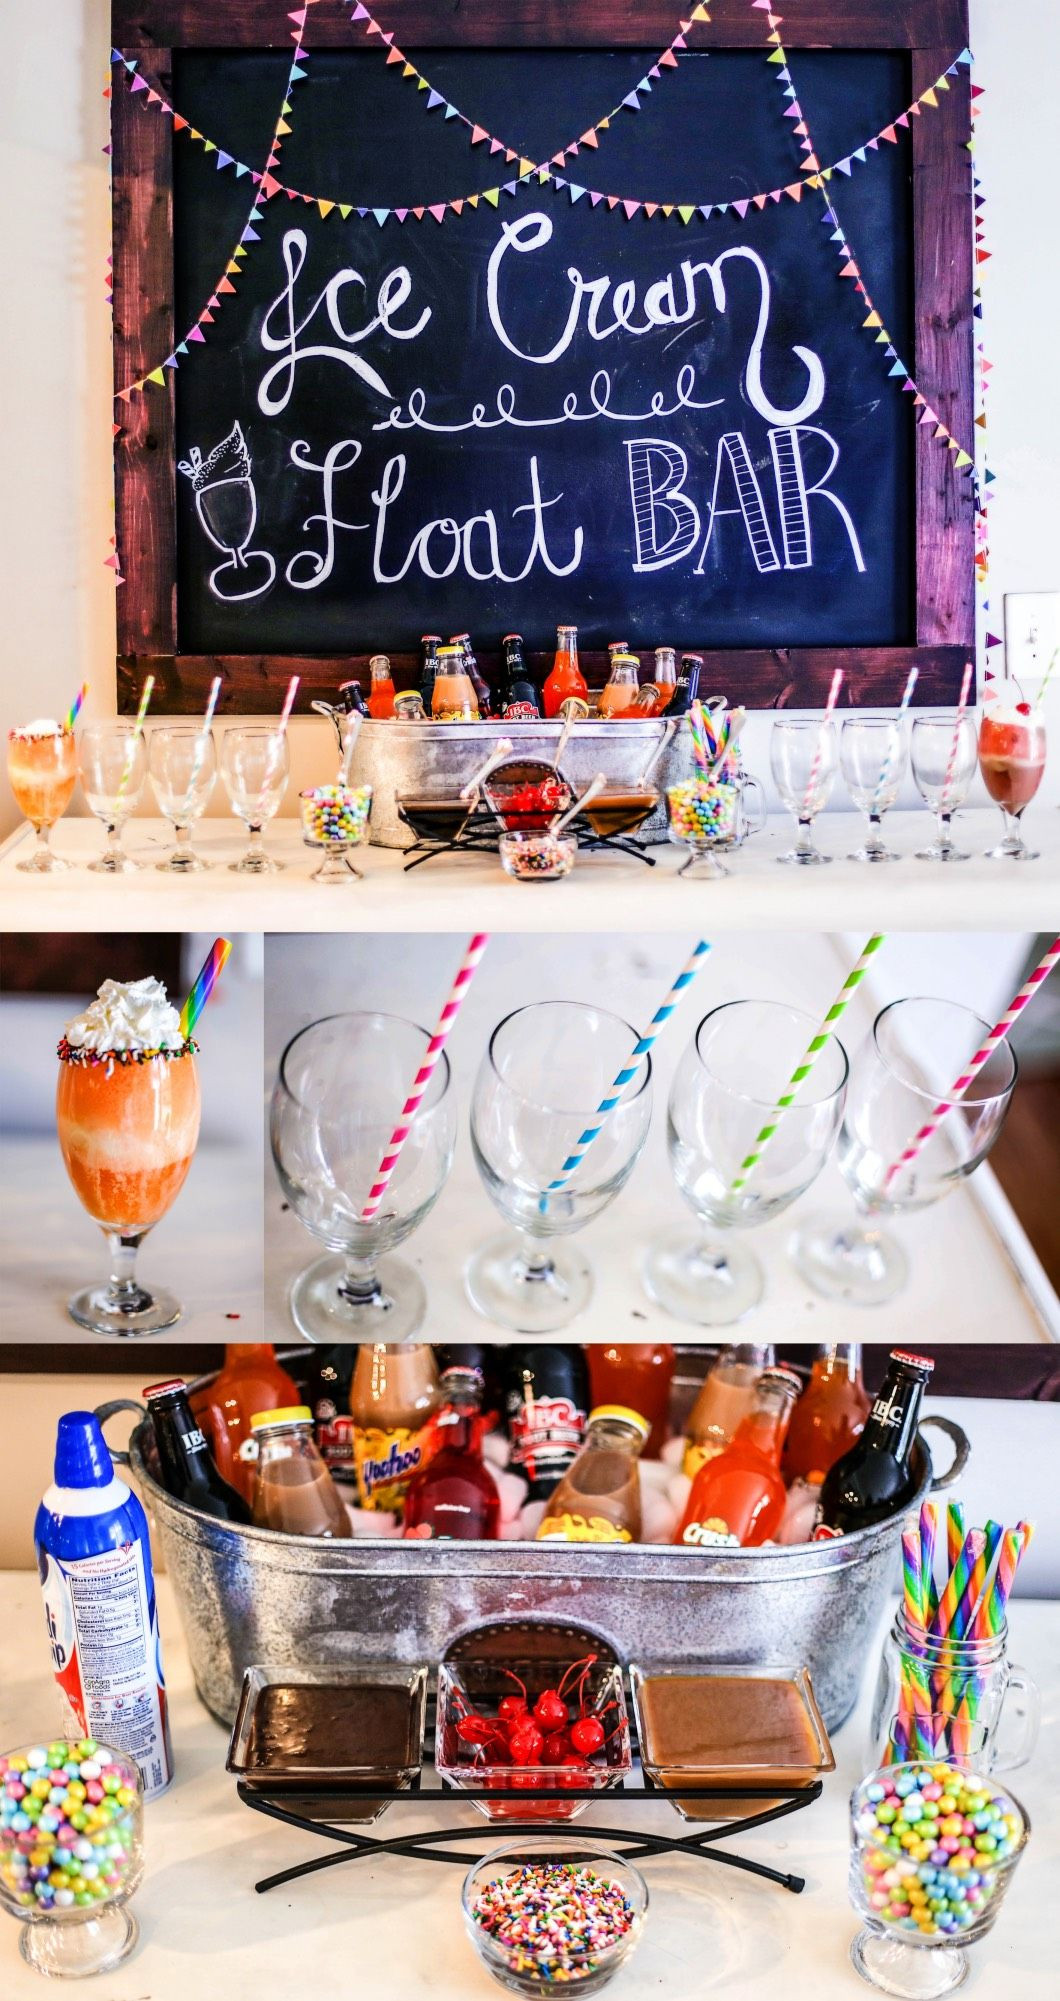 Ice Cream Bar Ideas For Birthday Party
 Ice Cream Float Bar